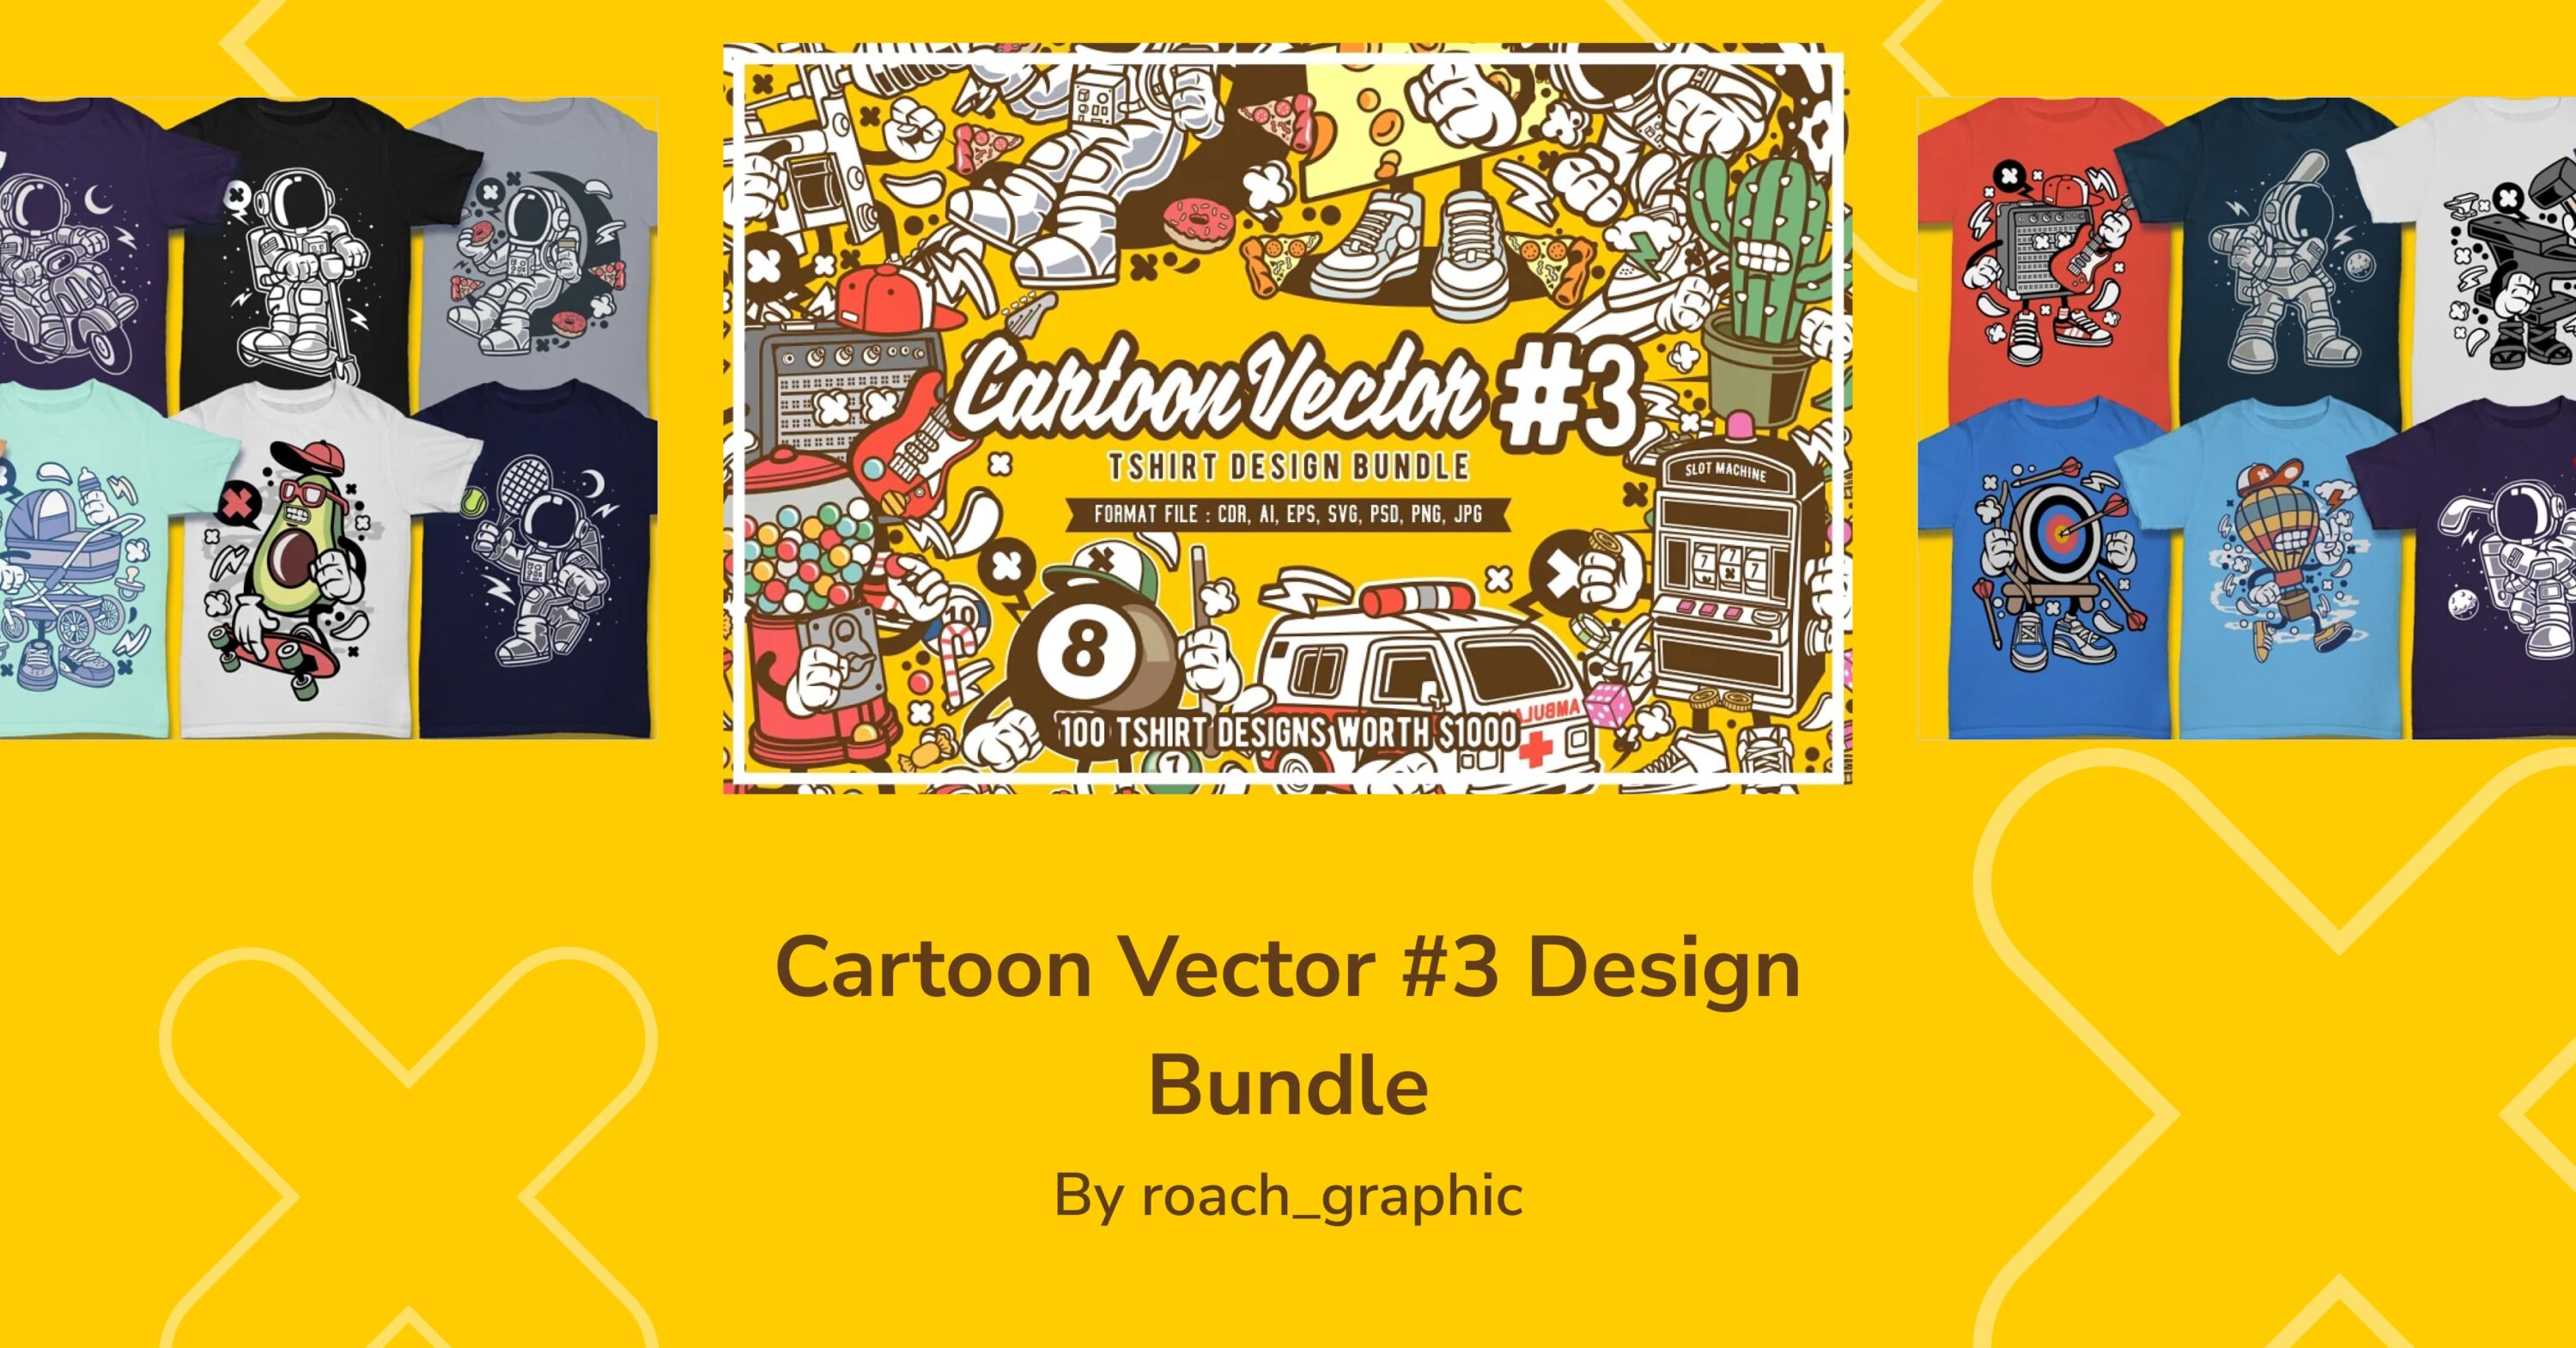 Cartoon Vector #3 Design Bundle facebook image.